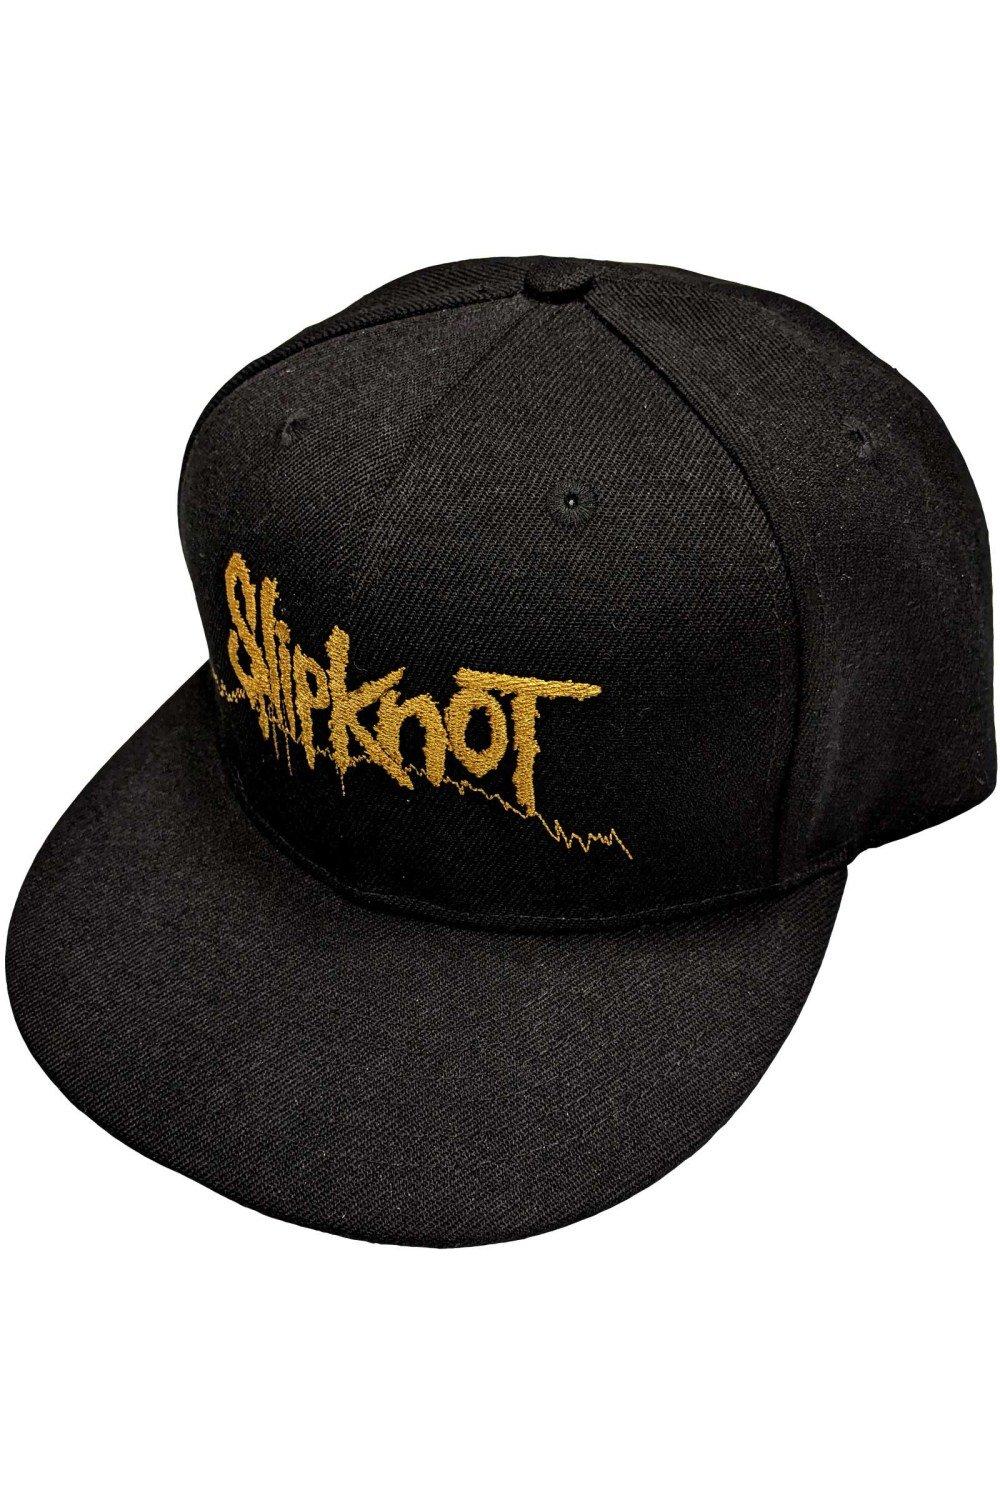 Кепка Snapback со штрих-кодом Slipknot, черный slipknot slipknot iowa limited colour 2 lp